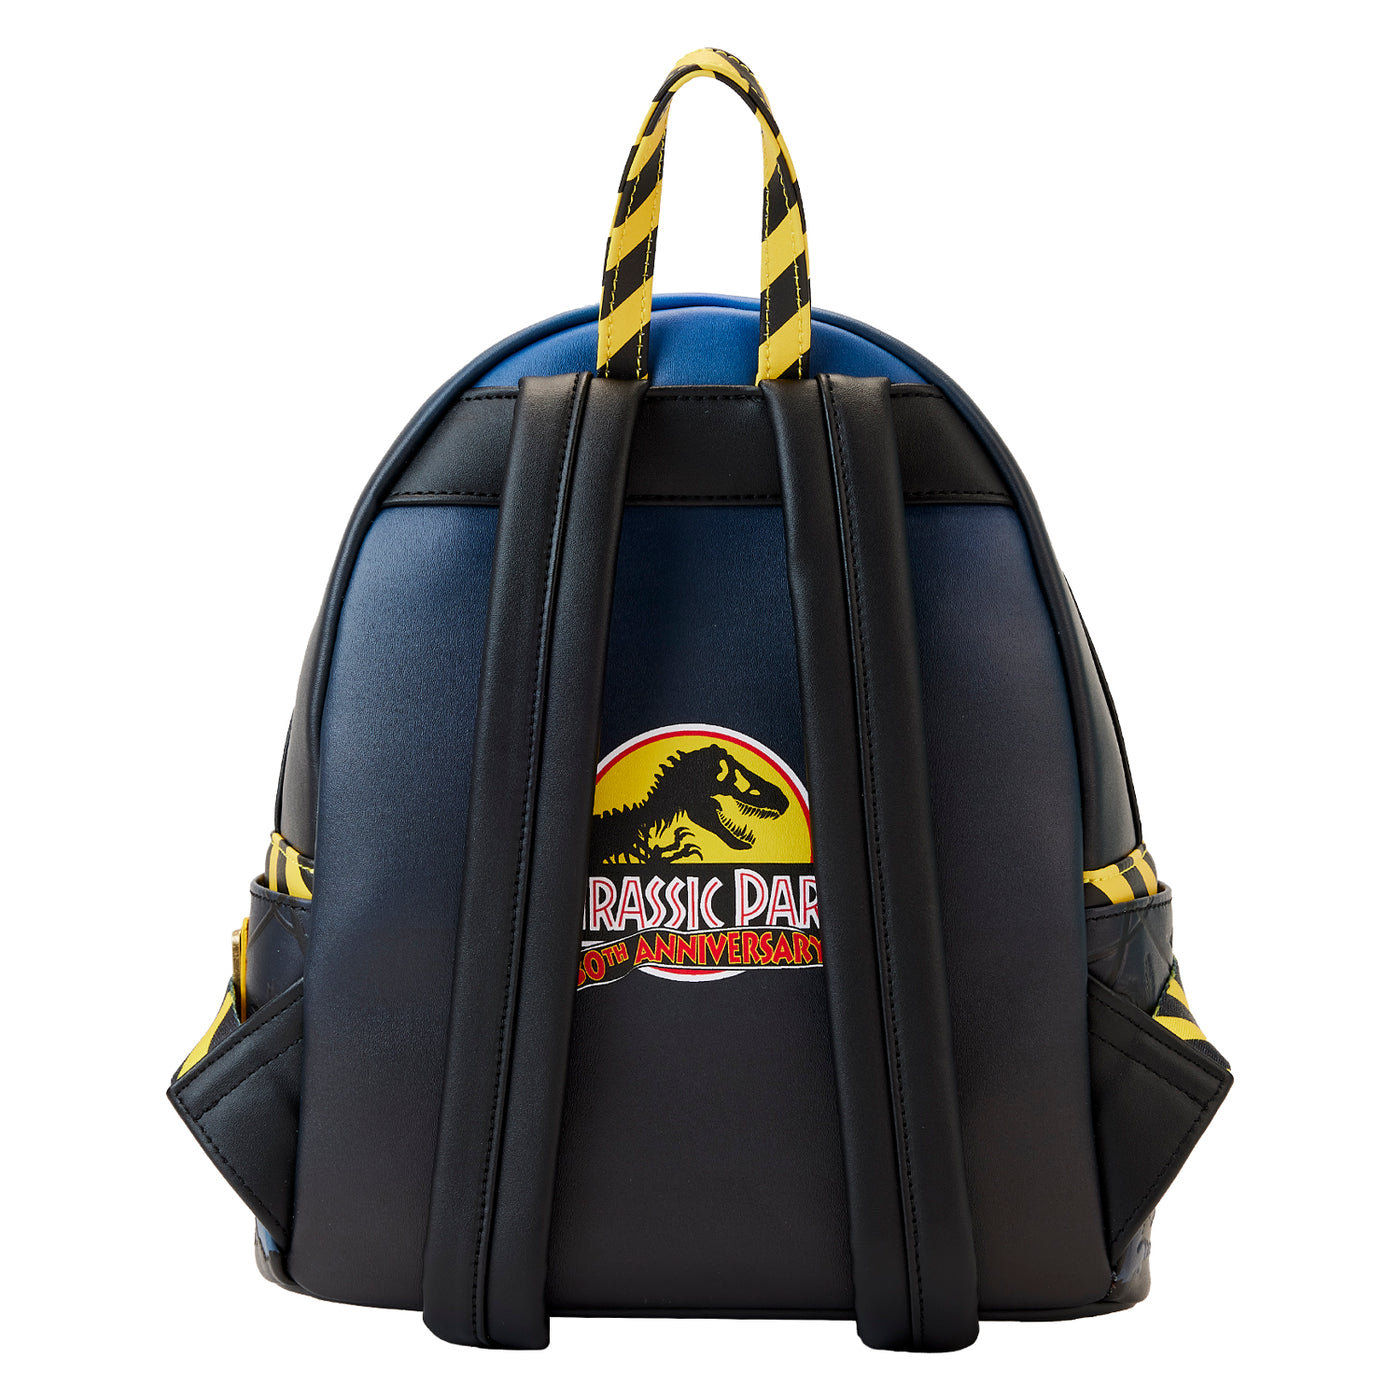 Jurassic Park 30th Anniversary Dino Moon Glow in the Dark Mini Backpack